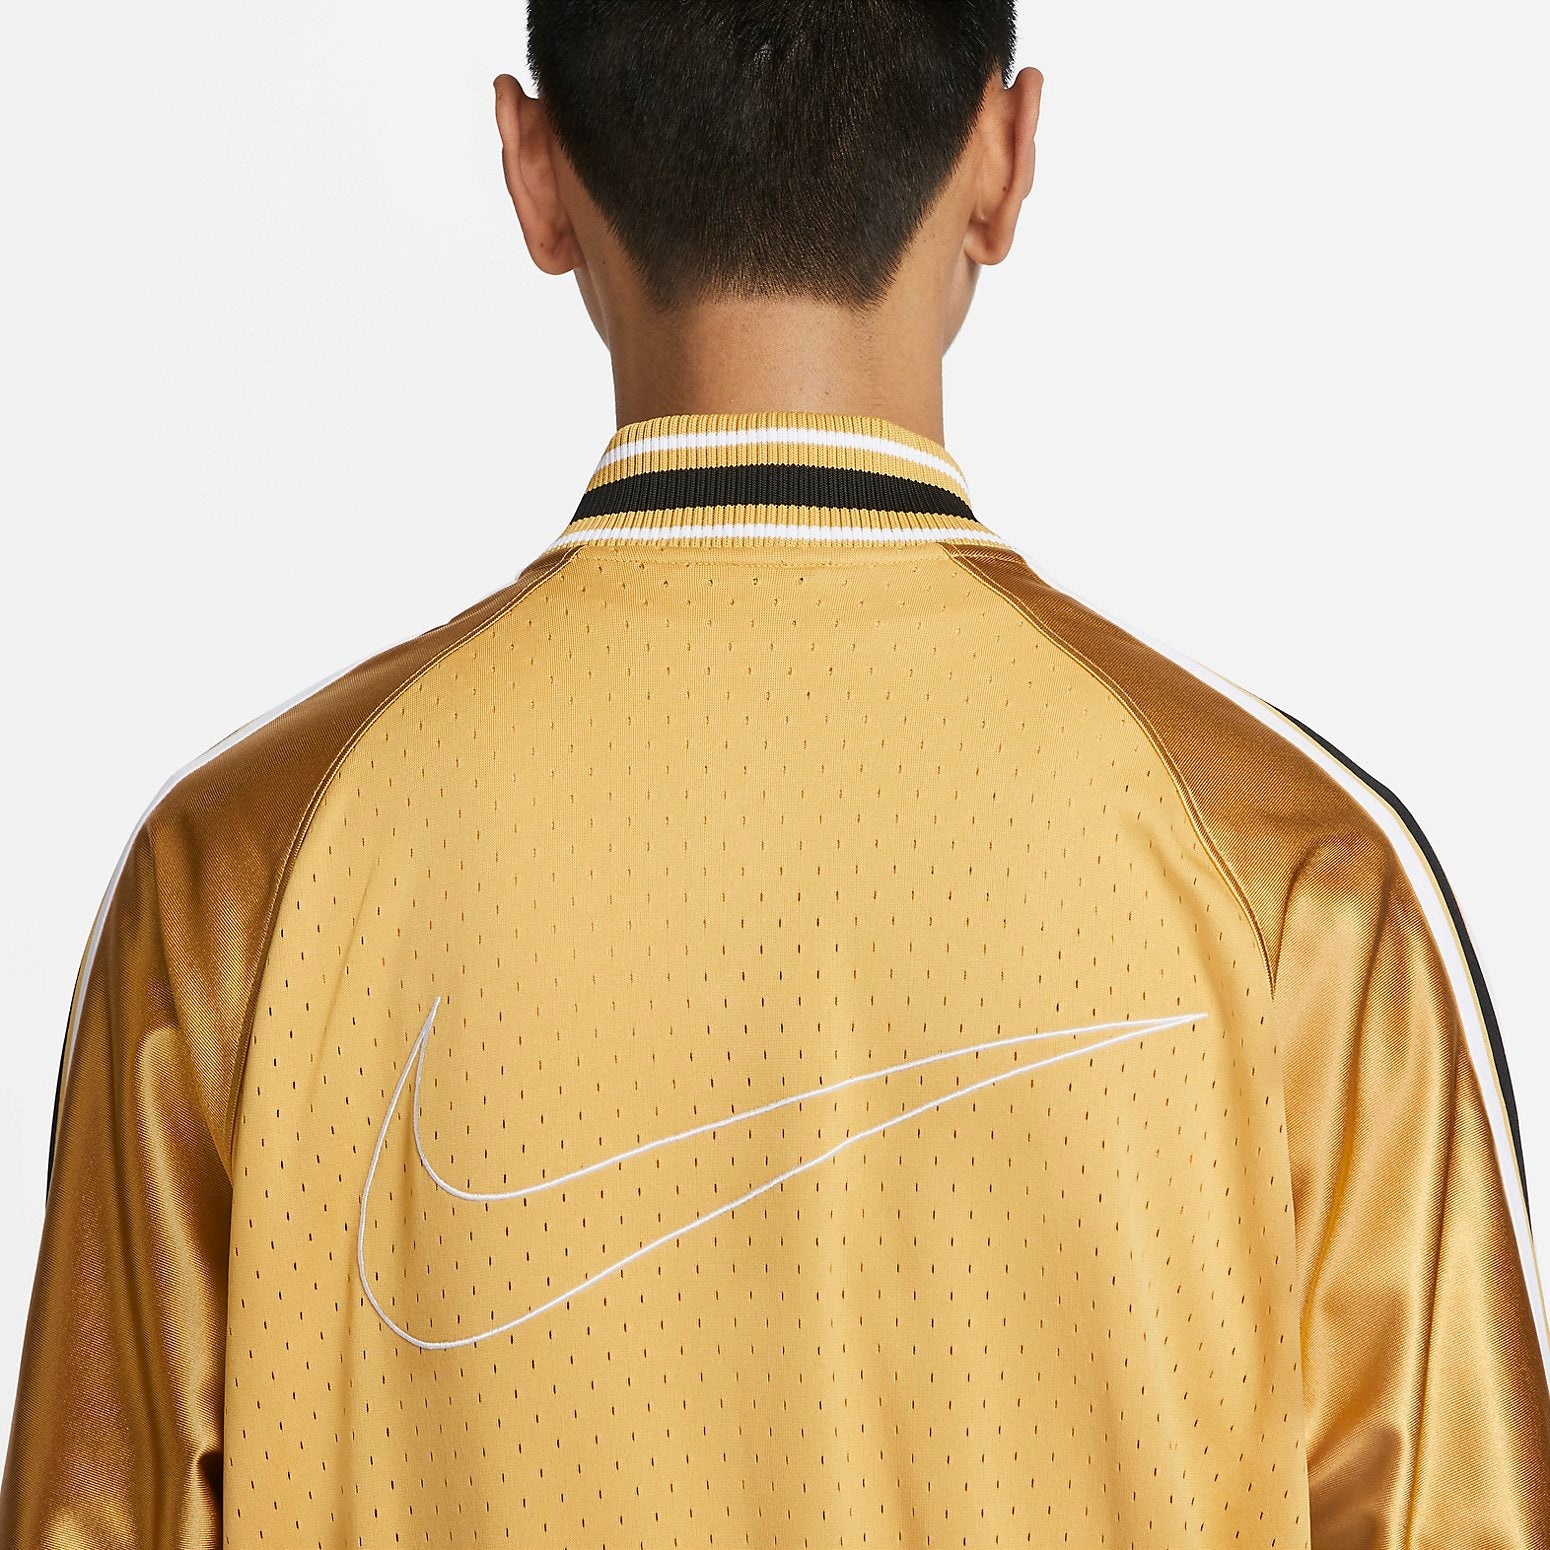 Nike Premium Basketball Jacket 'Wheat Gold' DX0348-725 - 4